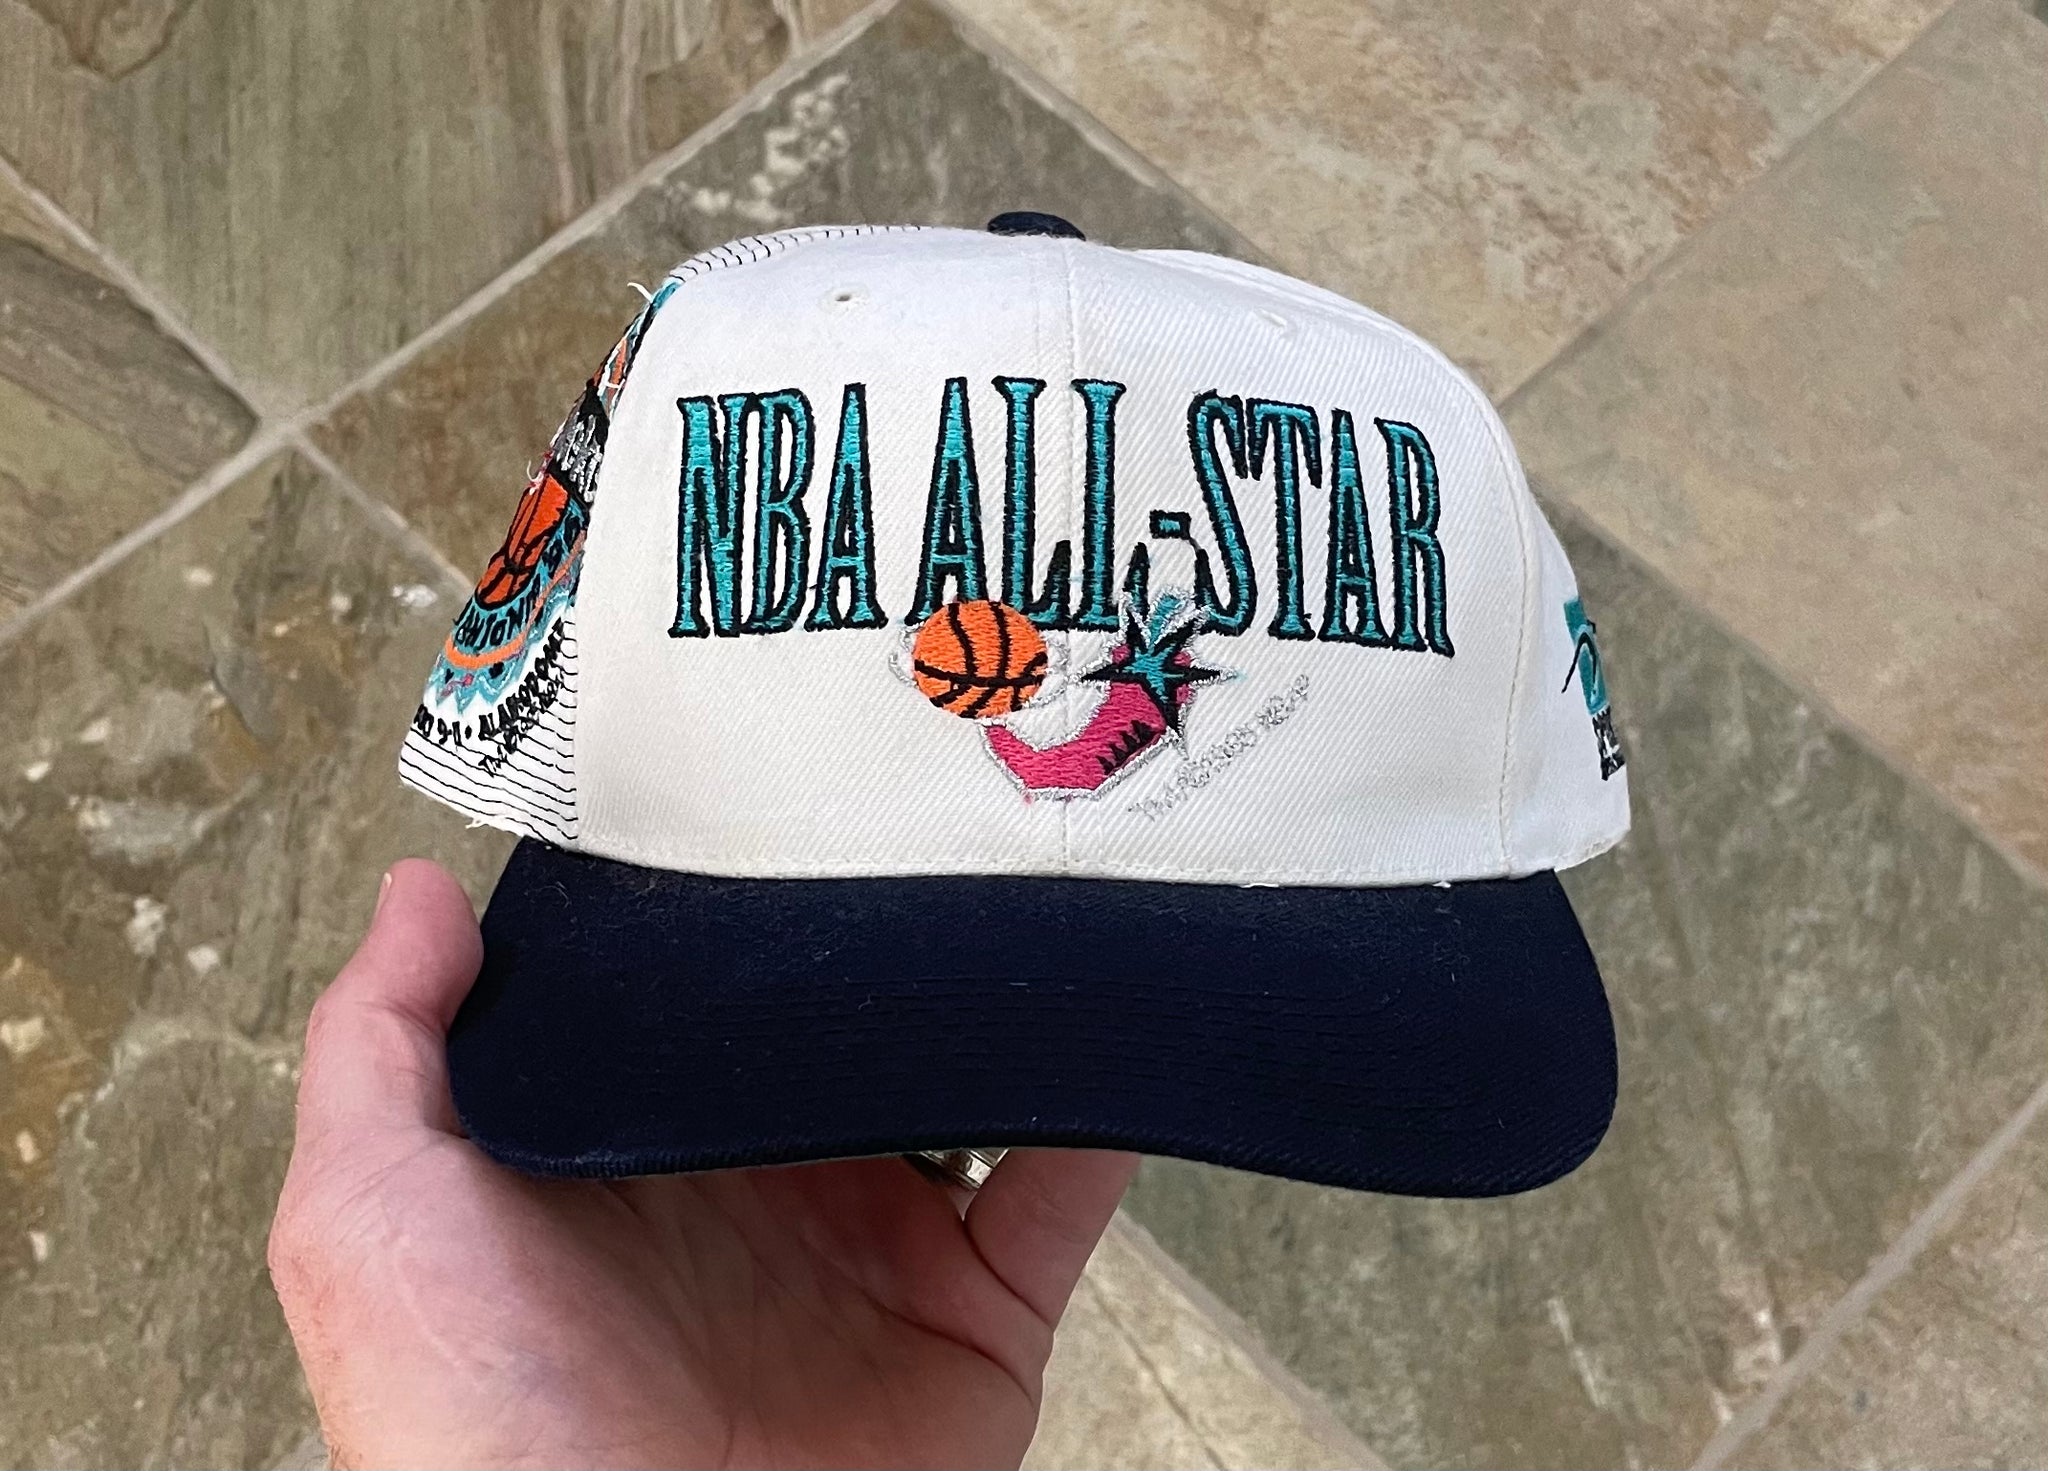 NBA All Star Jerseys, Shirts, Hats